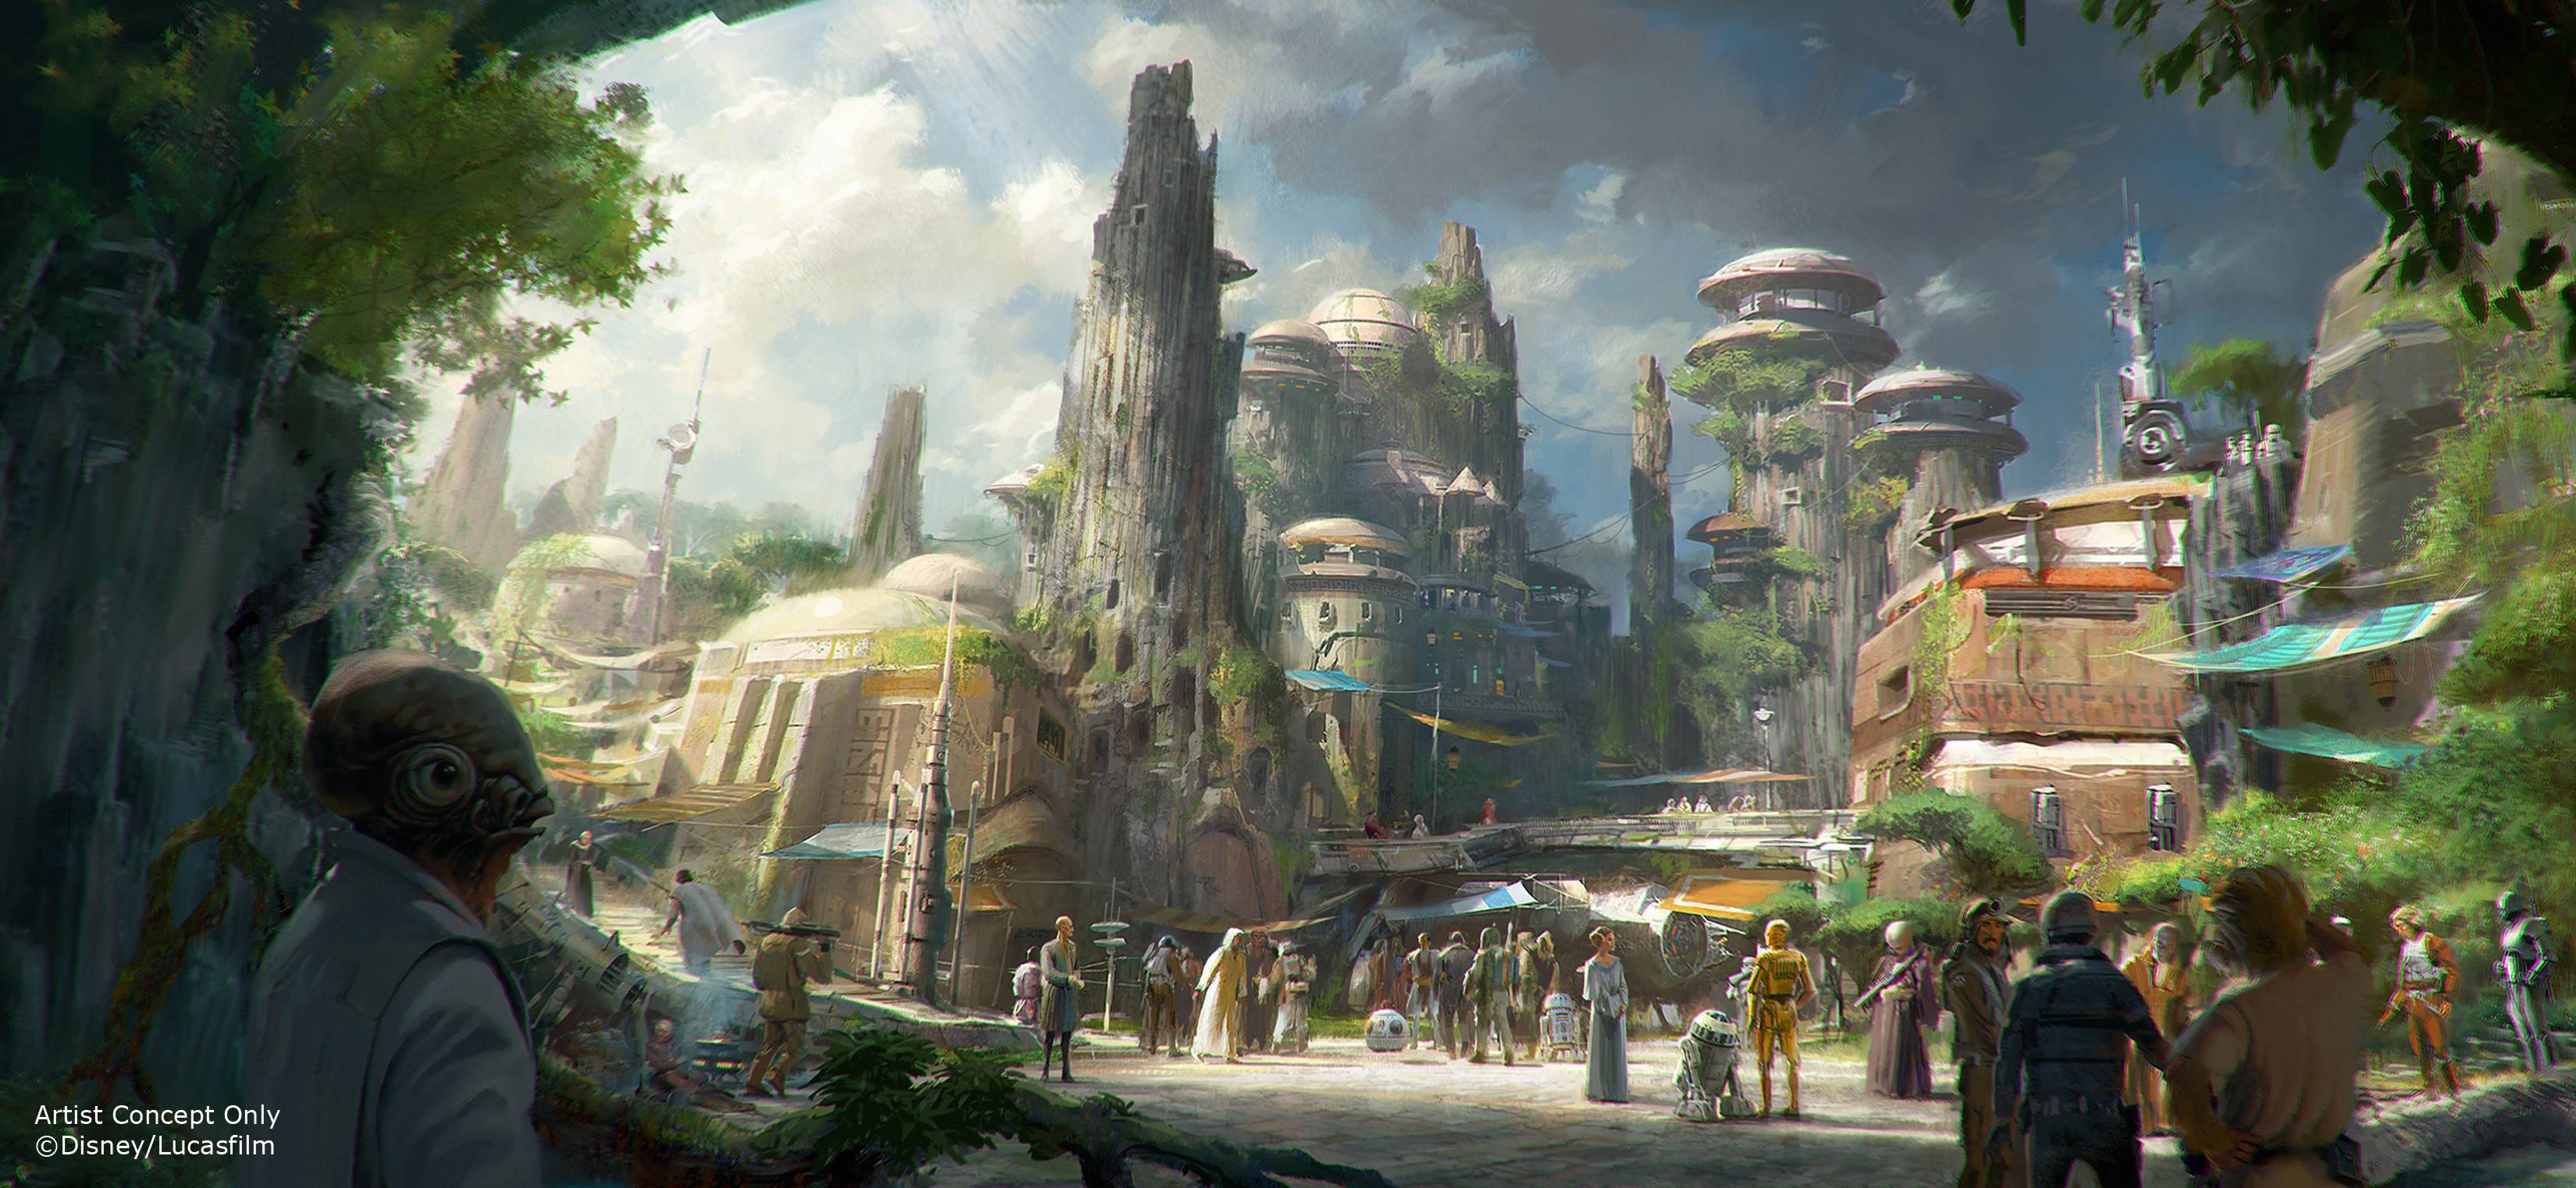 Star Wars themed land at Disney's Hollywood Studios concept art